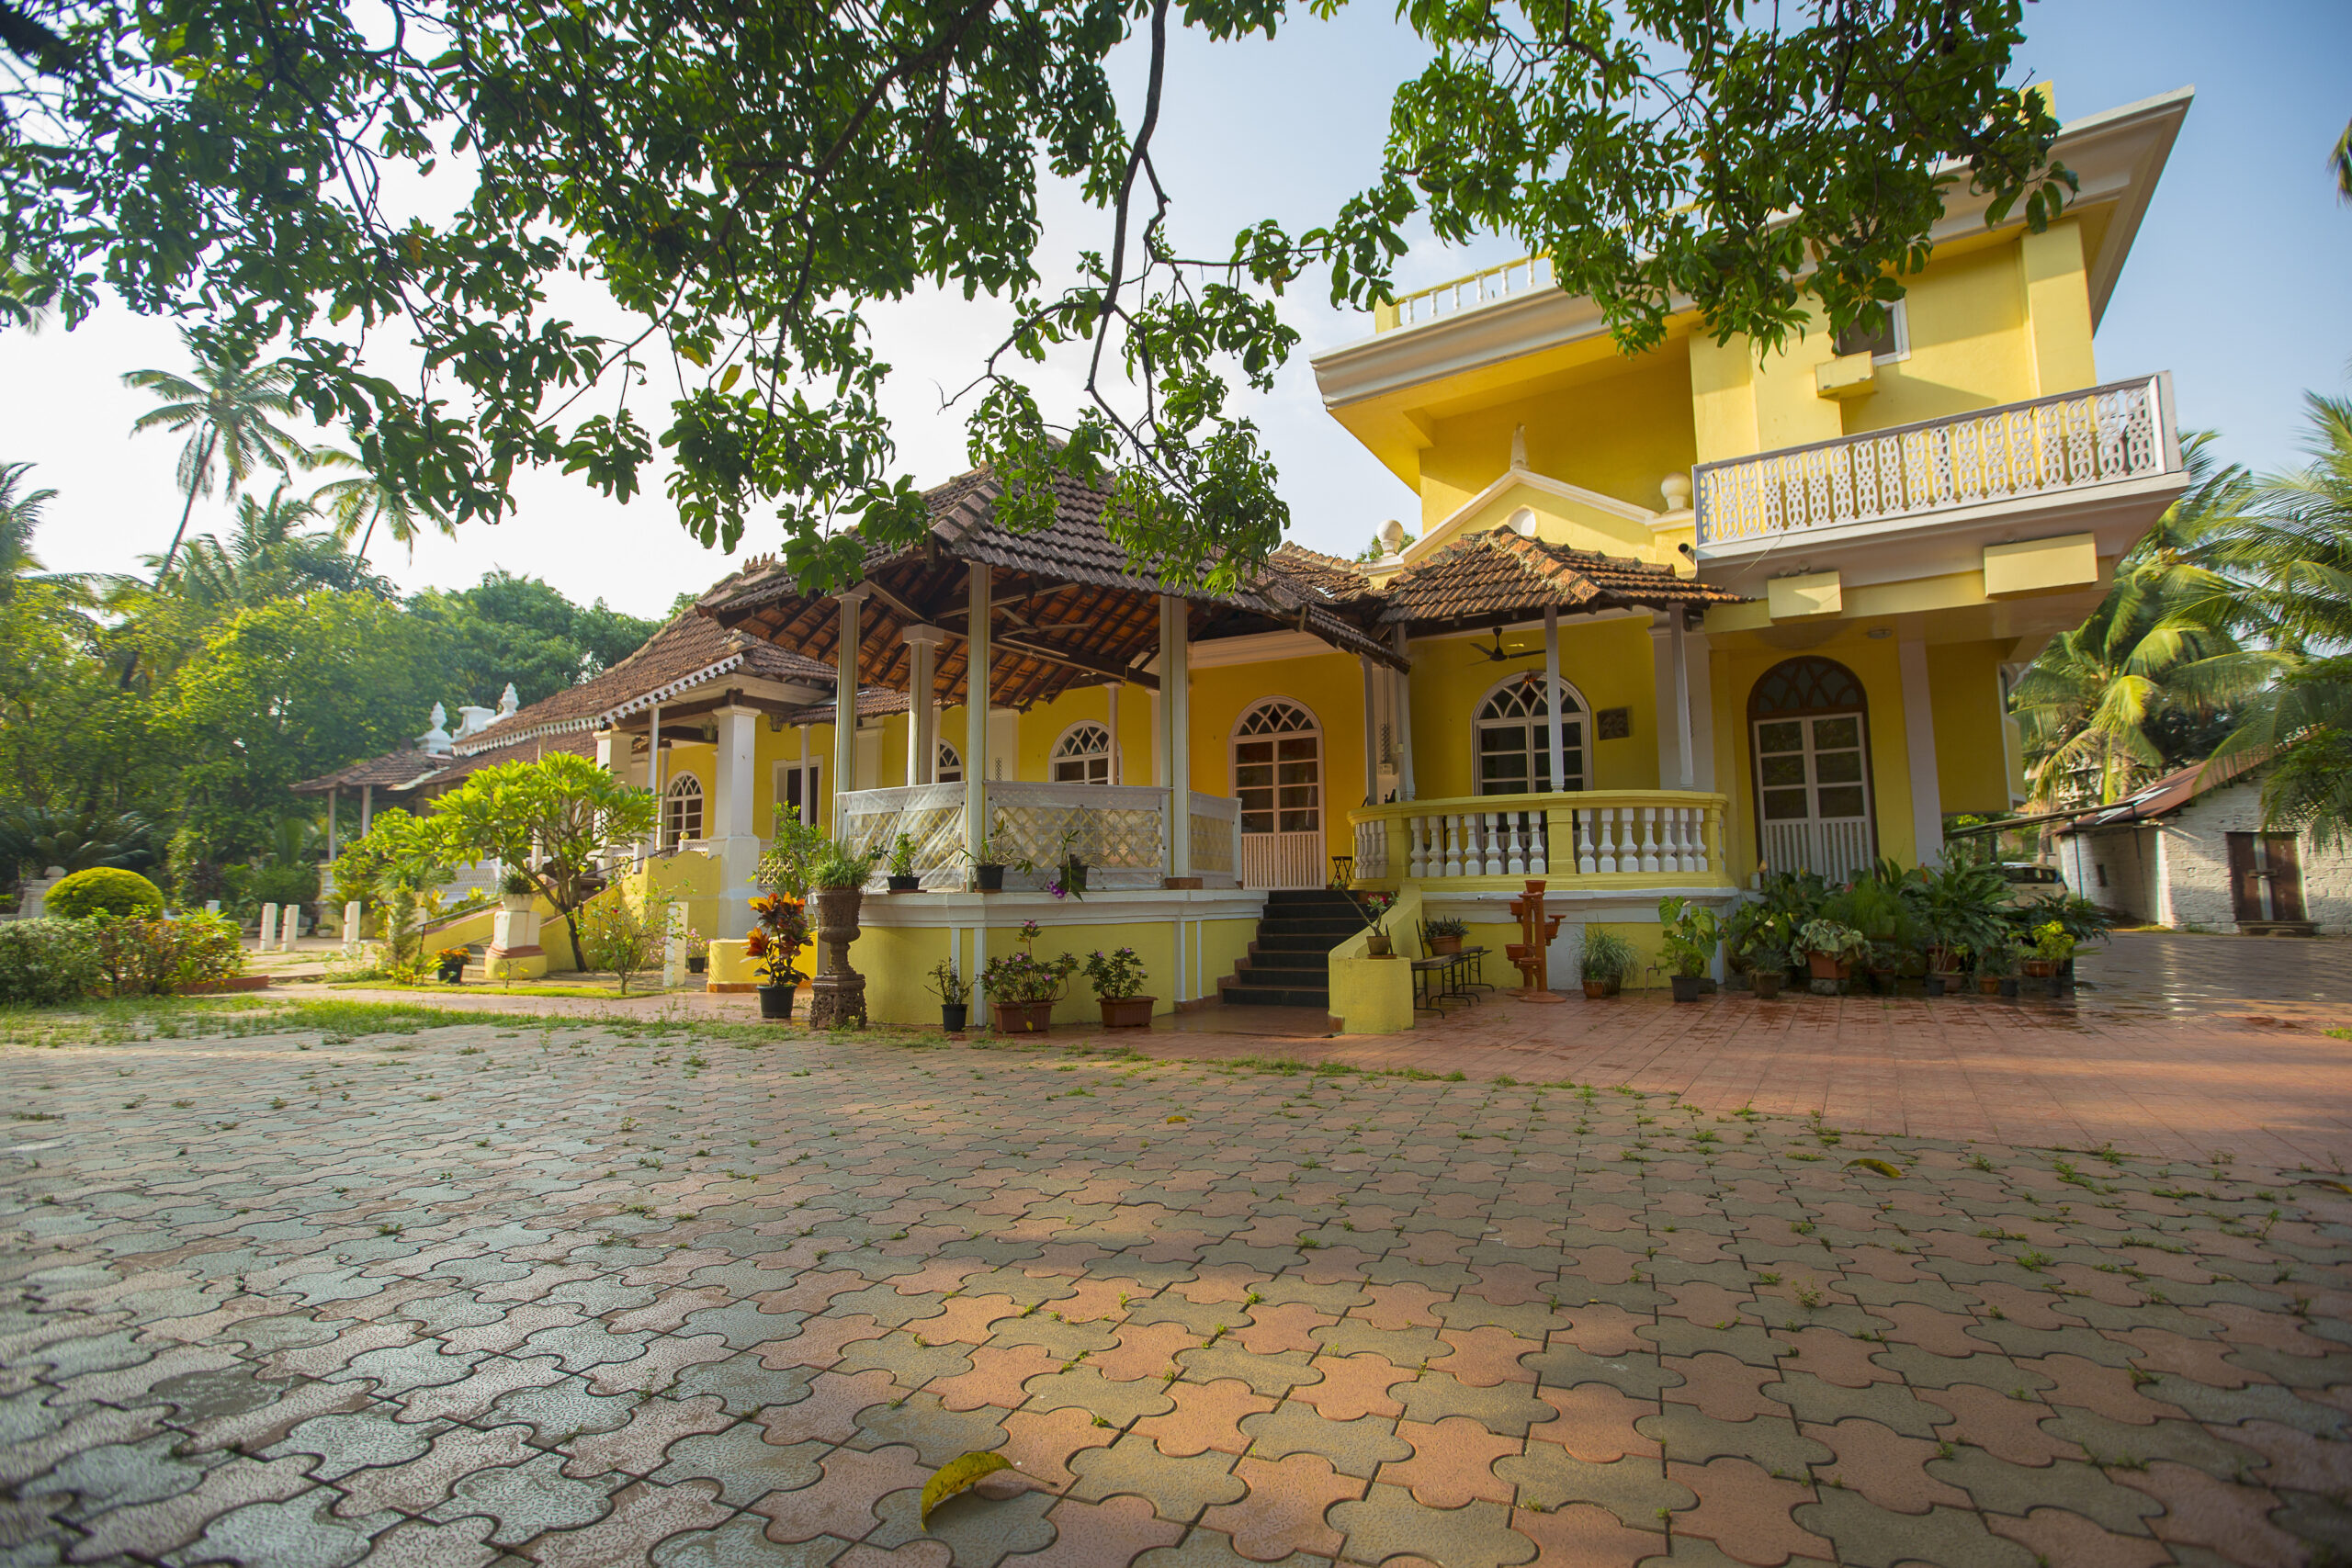 Beautiful heritage house in South Goa | Beatific Betalbatim: The Quietitude of Goan village life